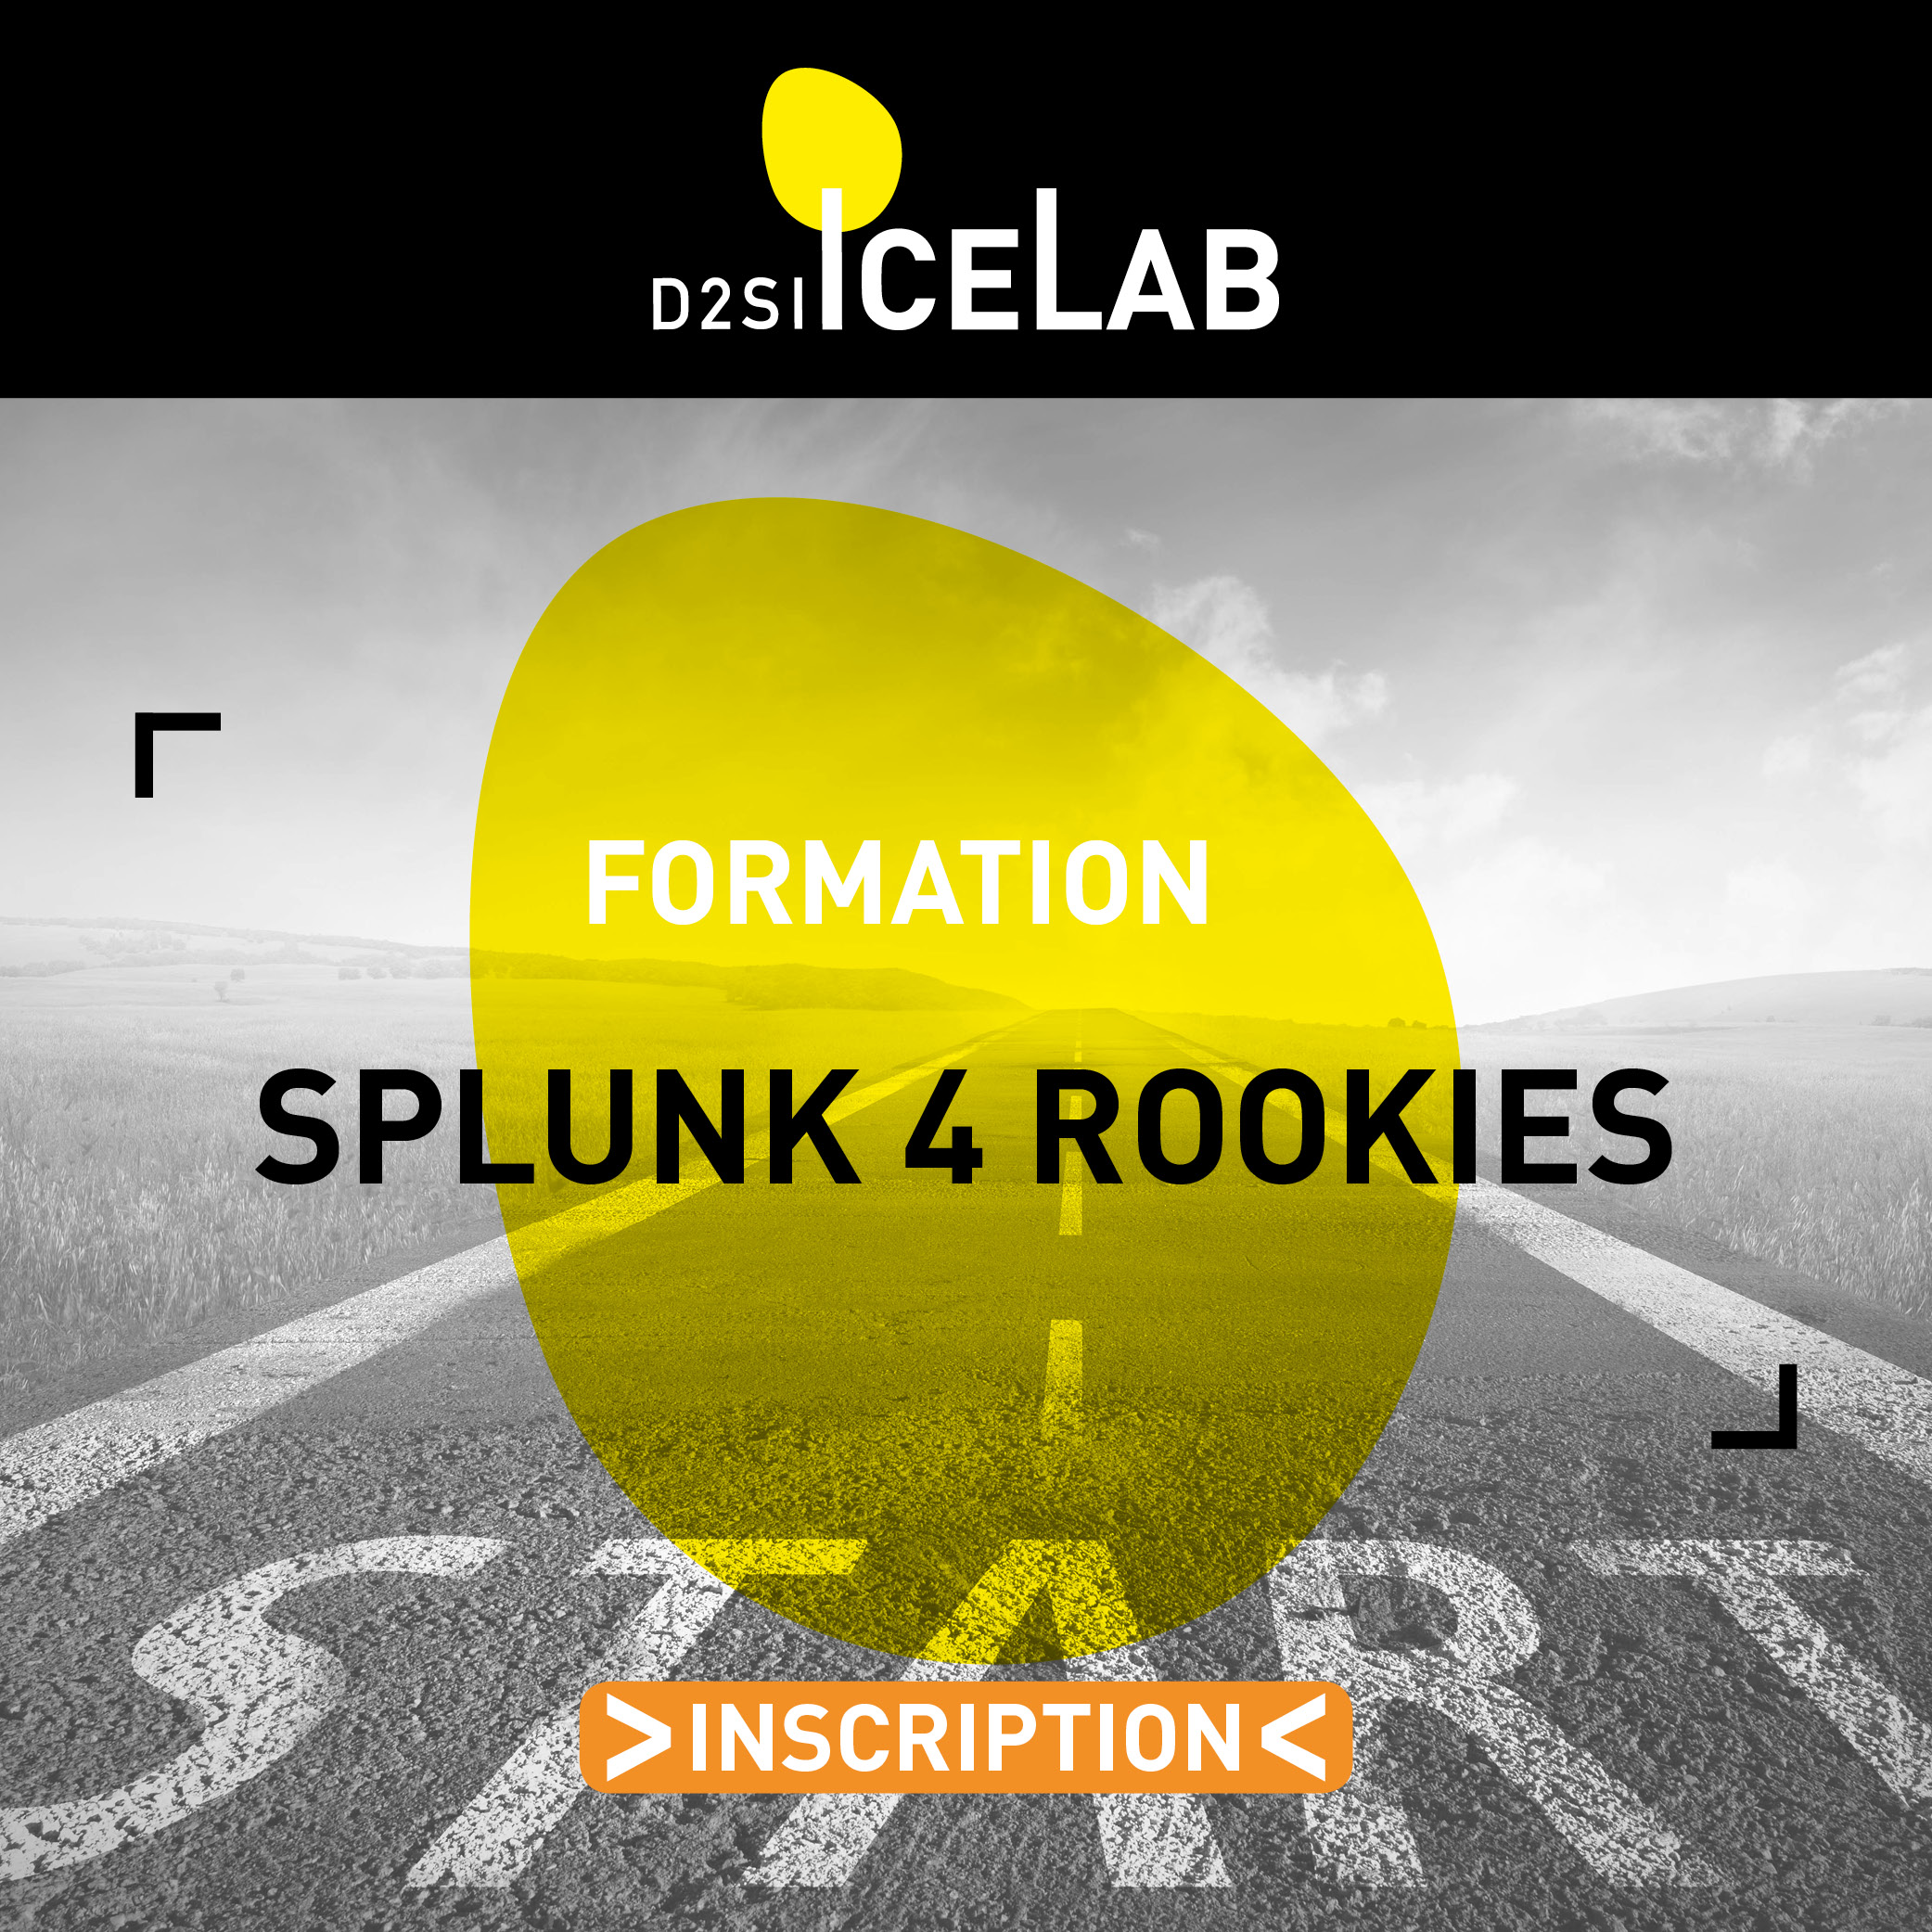 Splunk 4 rookies ICELAB